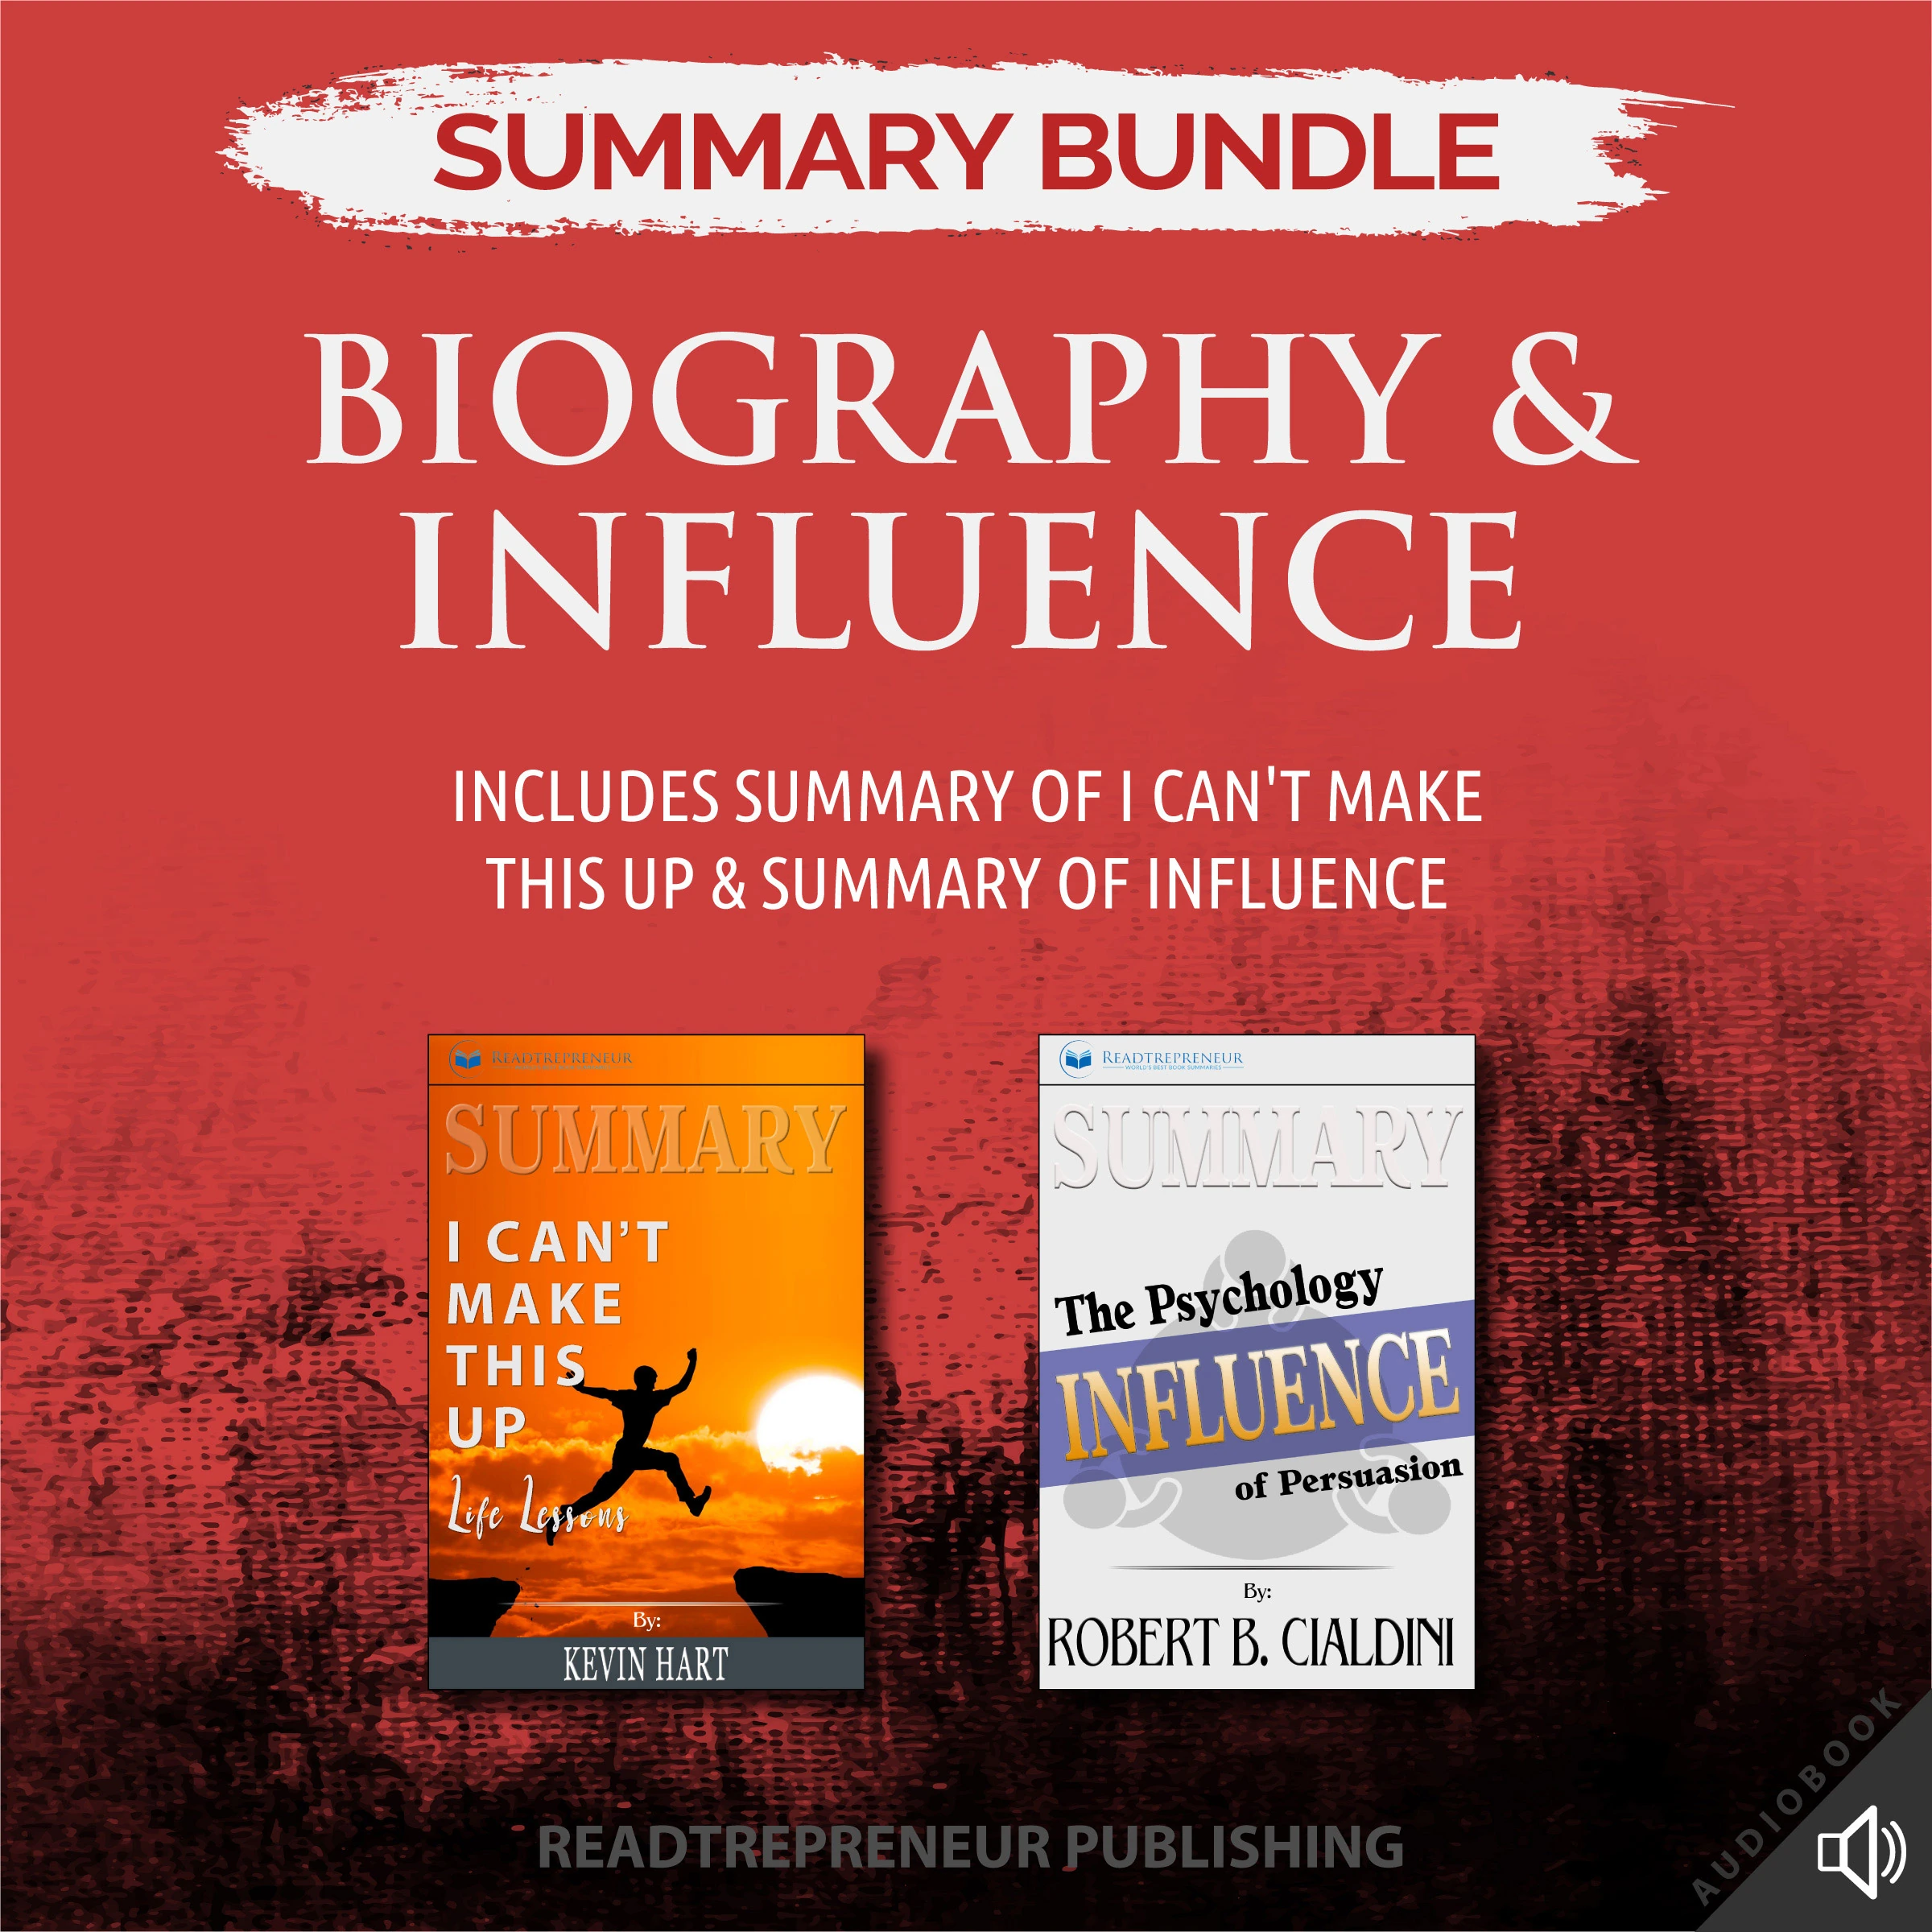 Summary Bundle: Biography & Influence | Readtrepreneur Publishing: Includes Summary of I Can't Make This Up & Summary of Influence Audiobook by Readtrepreneur Publishing